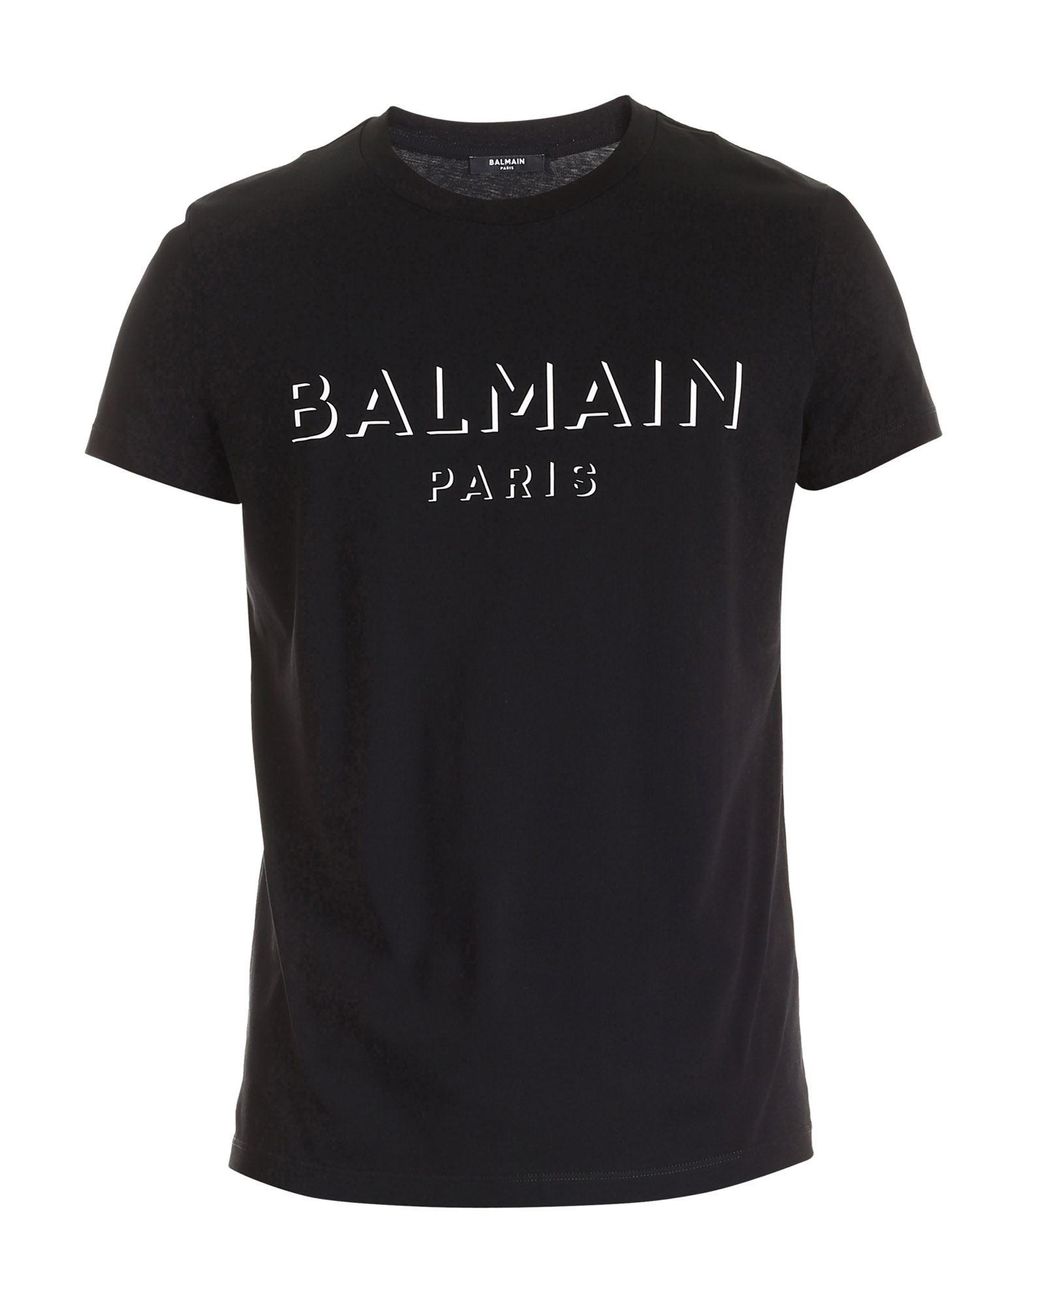 Balmain 3d Effect Logo T-shirt in Black for Men - Lyst